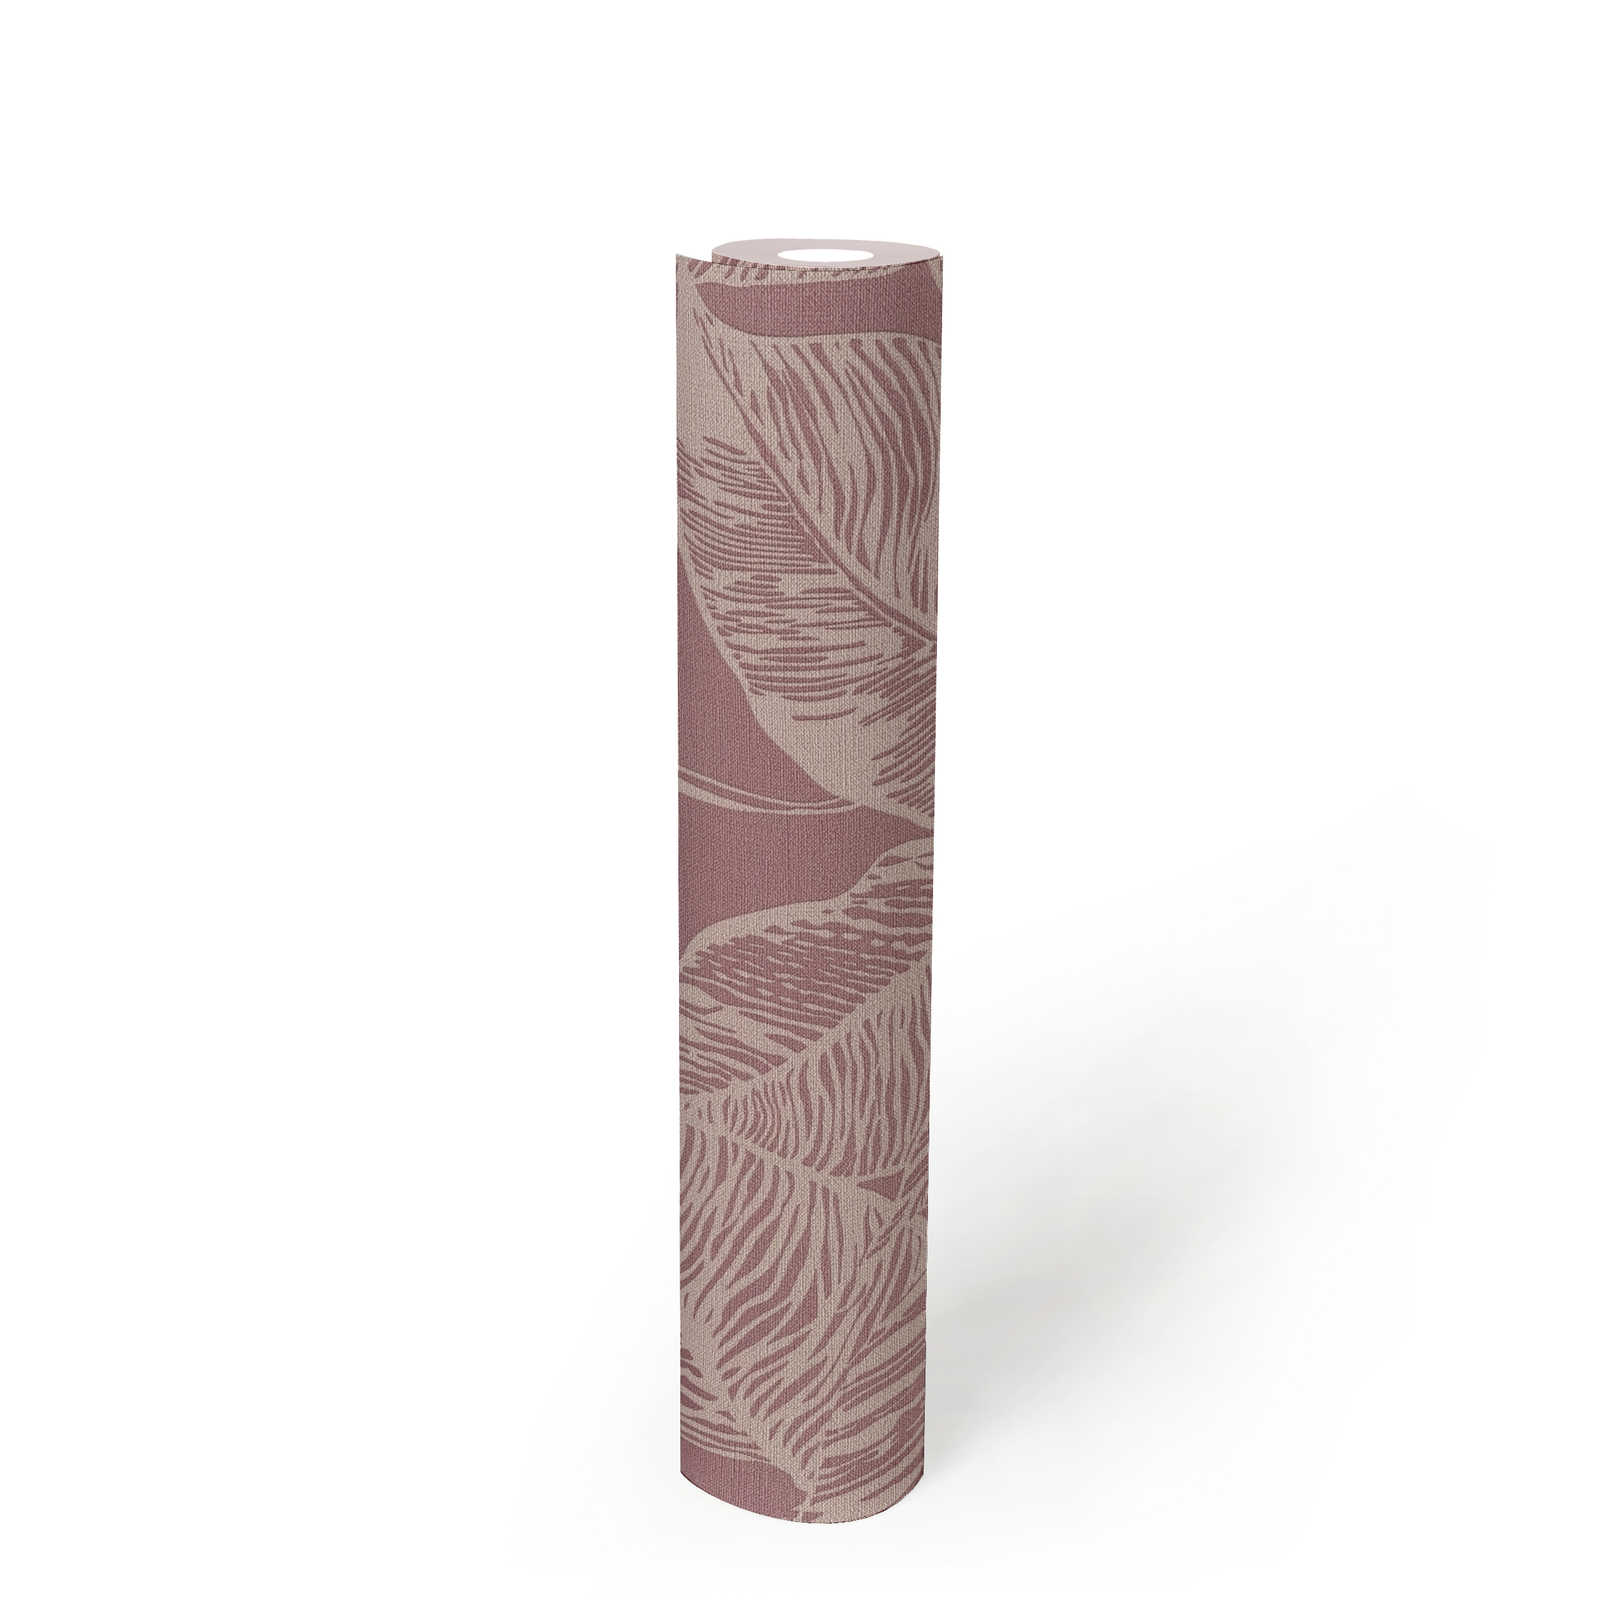             PVC-freie Vliestapete mit Blättermotiv – Rosa, Creme
        